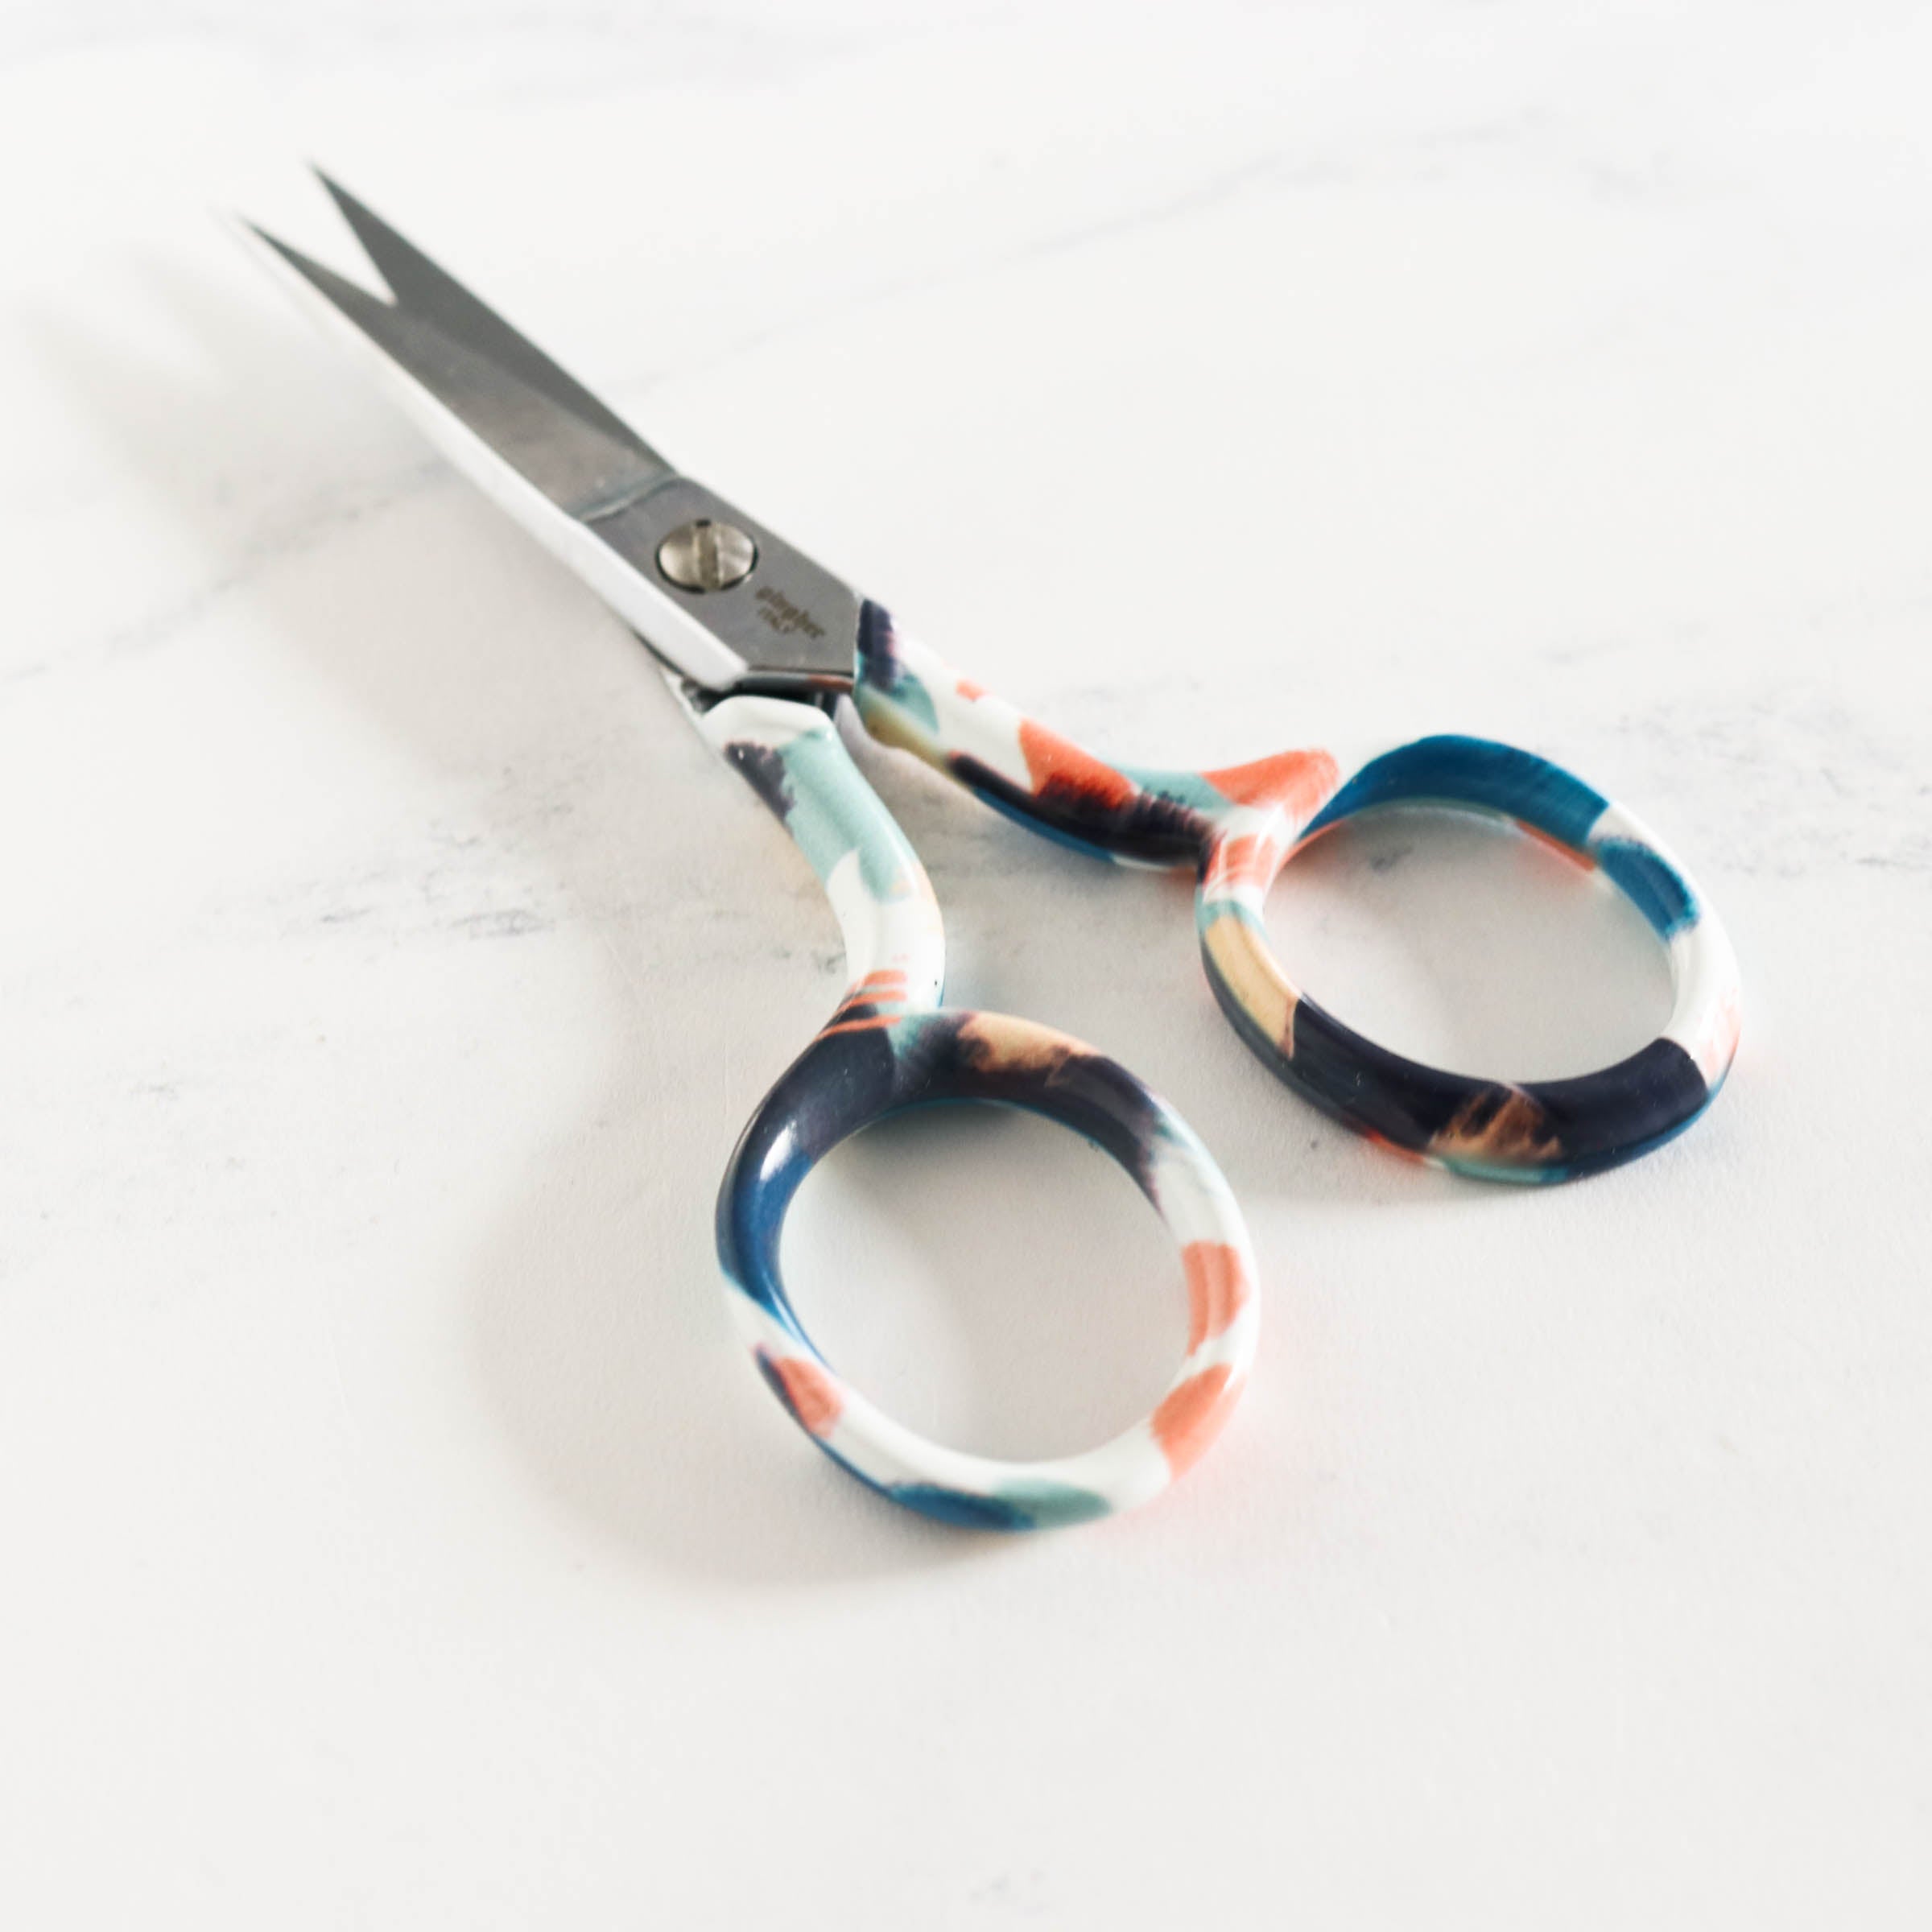 Fabric Scissors, Embroidery Scissors Small Shears Tailor Scissors